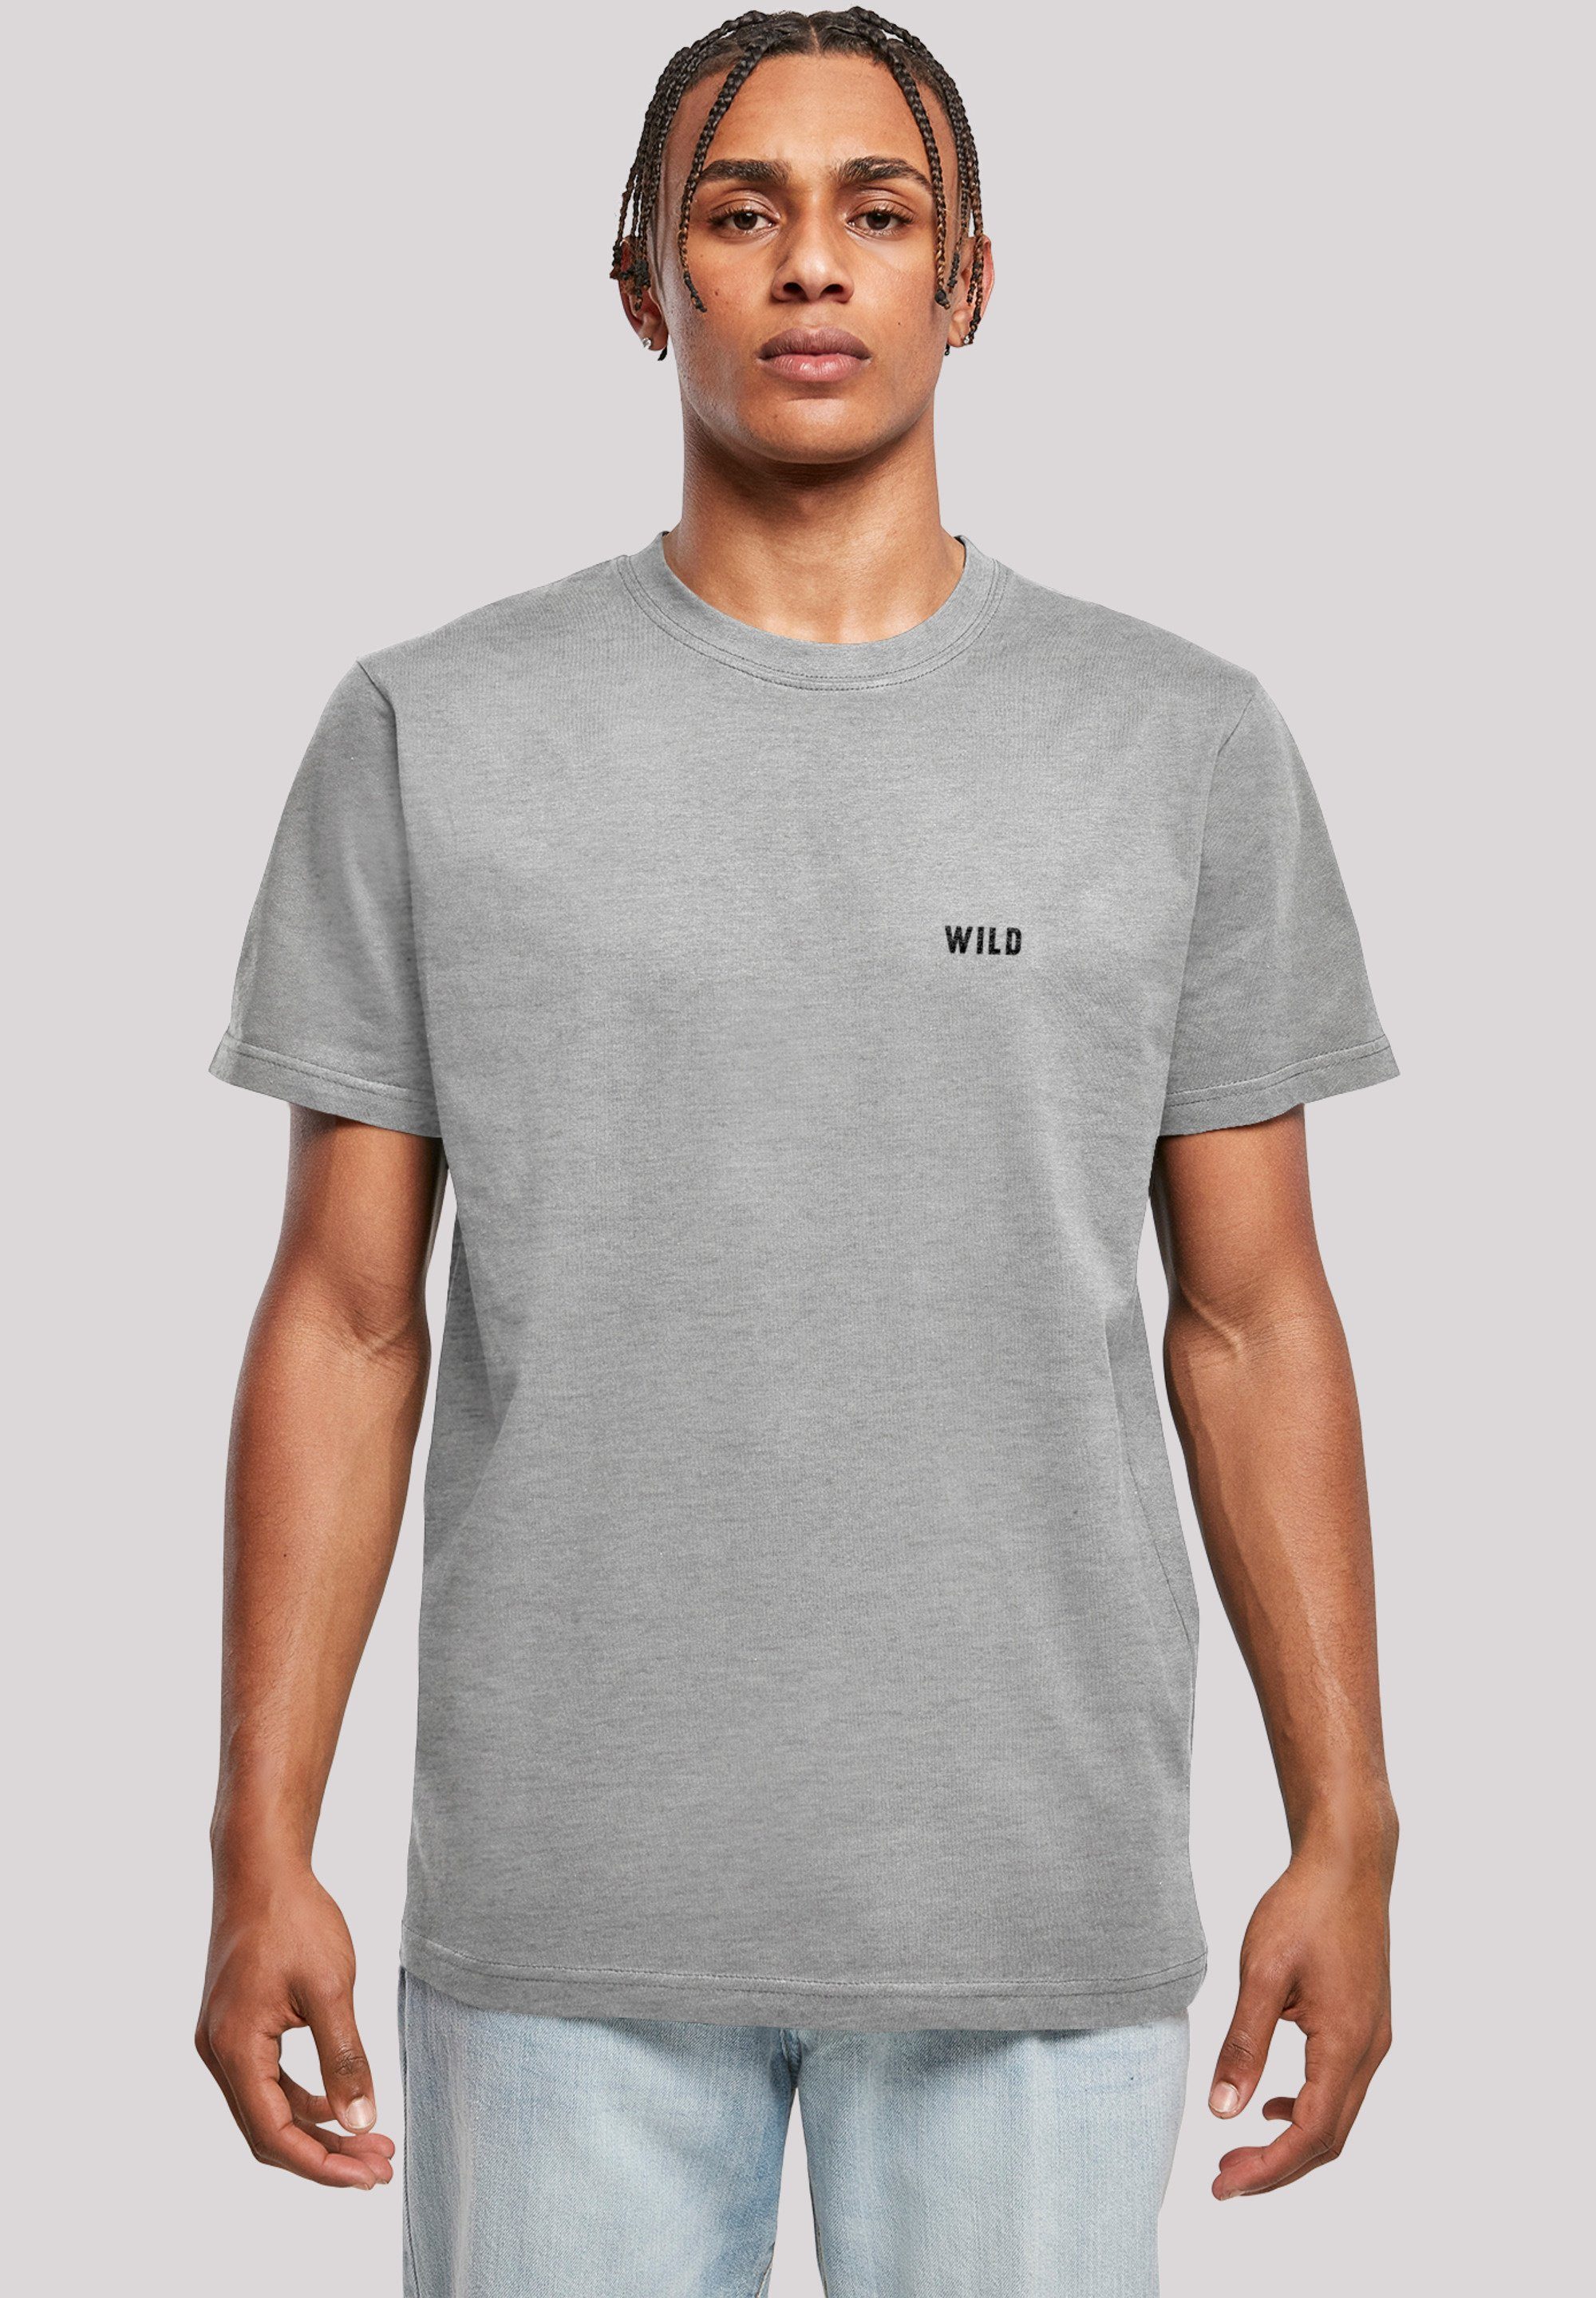 2022, Wild Jugendwort F4NT4STIC grey heather slang T-Shirt